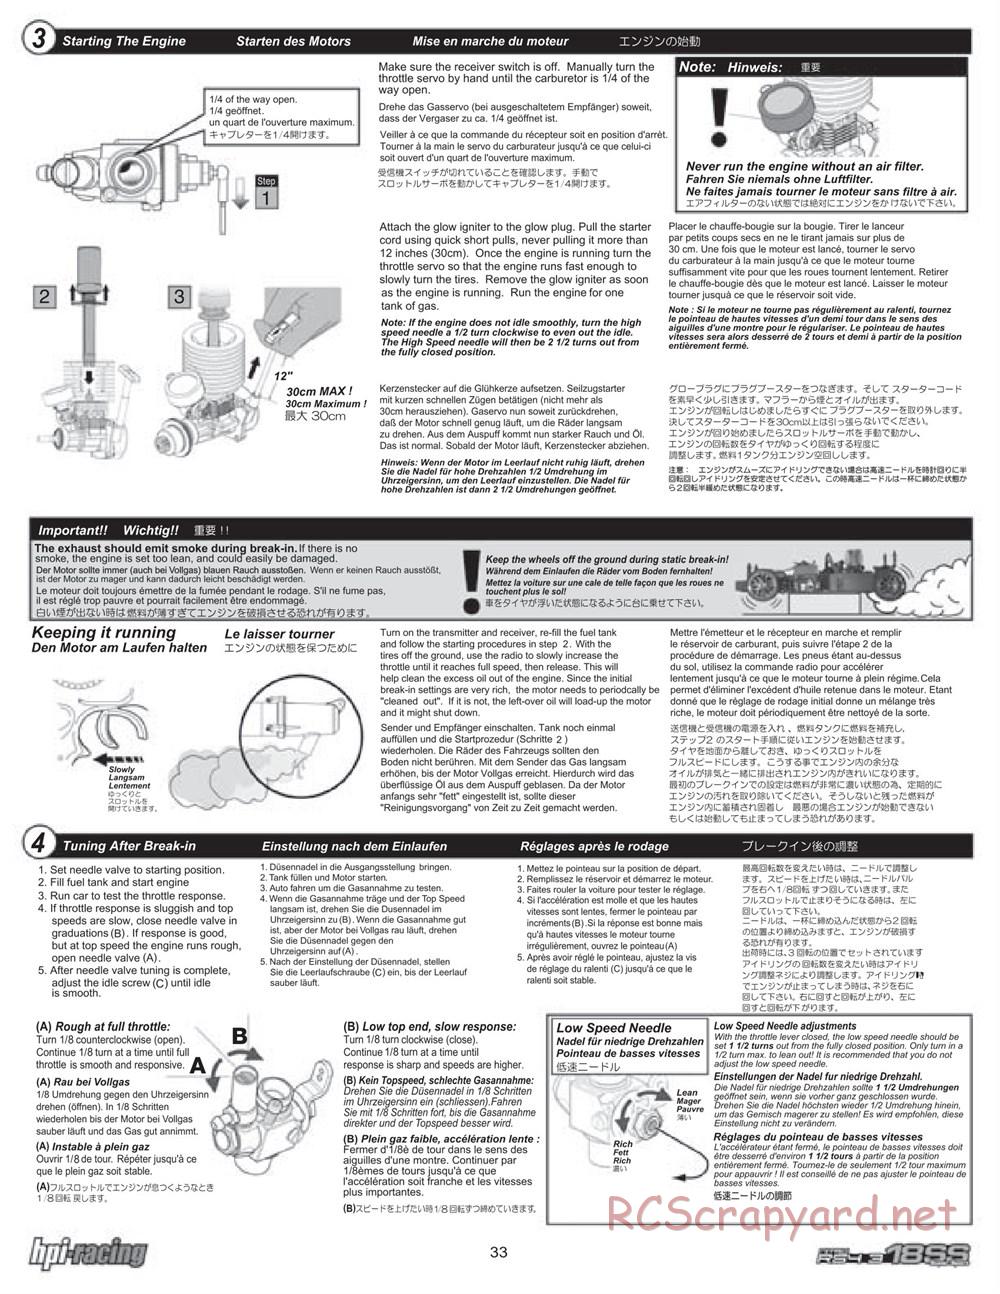 HPI - Nitro RS4 3 18SS - Manual - Page 33